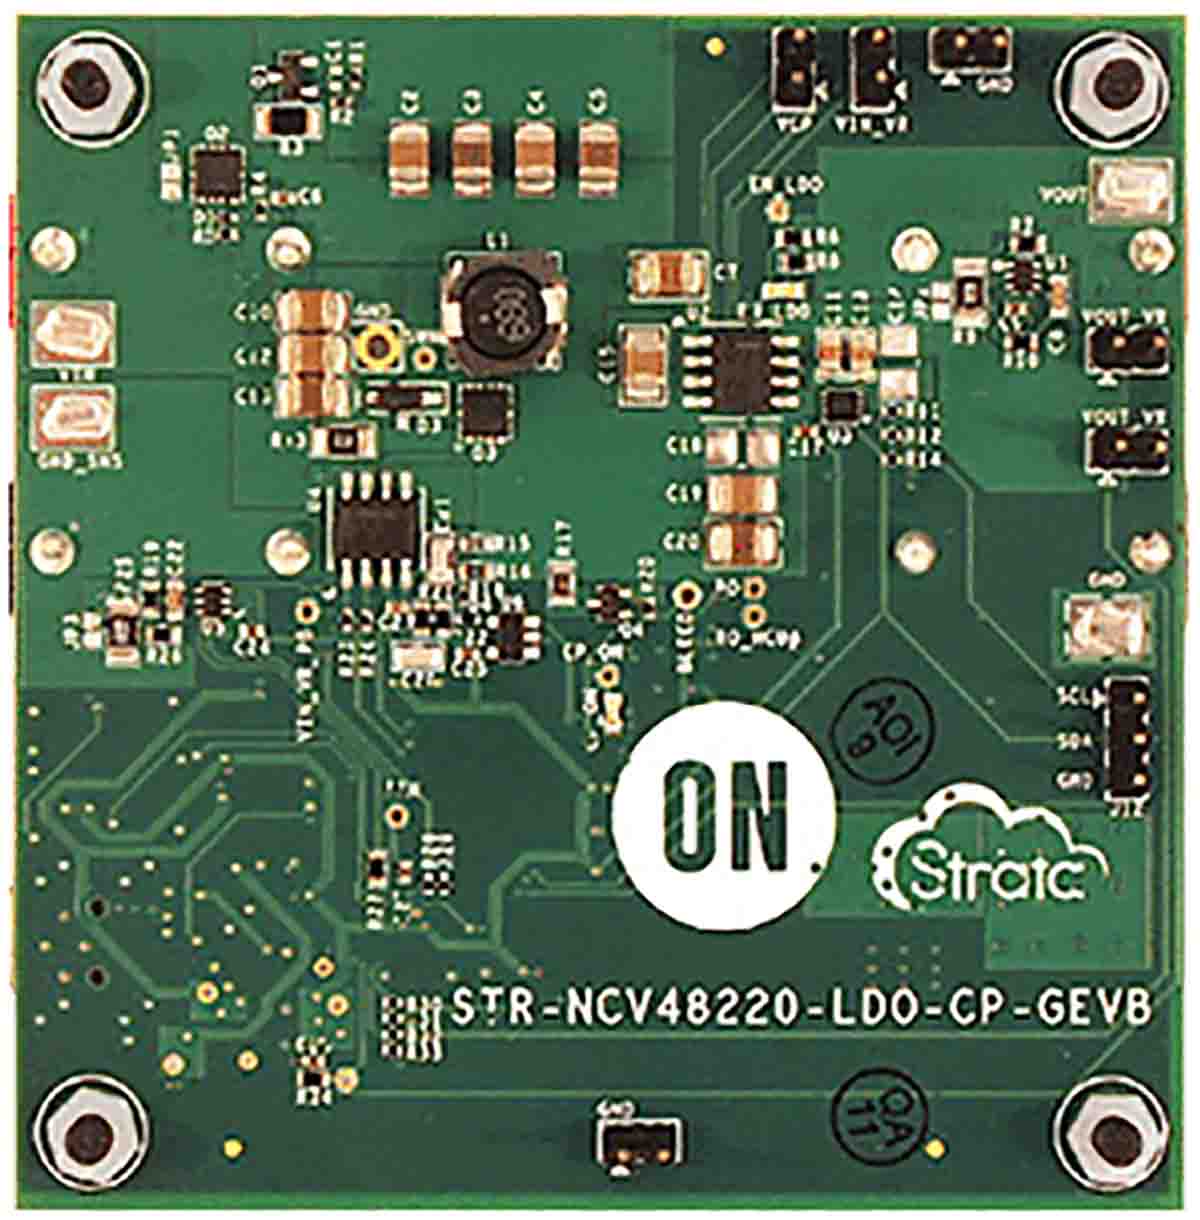 onsemi STR-NCV48220-LDO-CP-GEVB Strata Enabled NCV48220 LDO Charge Pump Evaluation Board for NCV48220 for Strata to